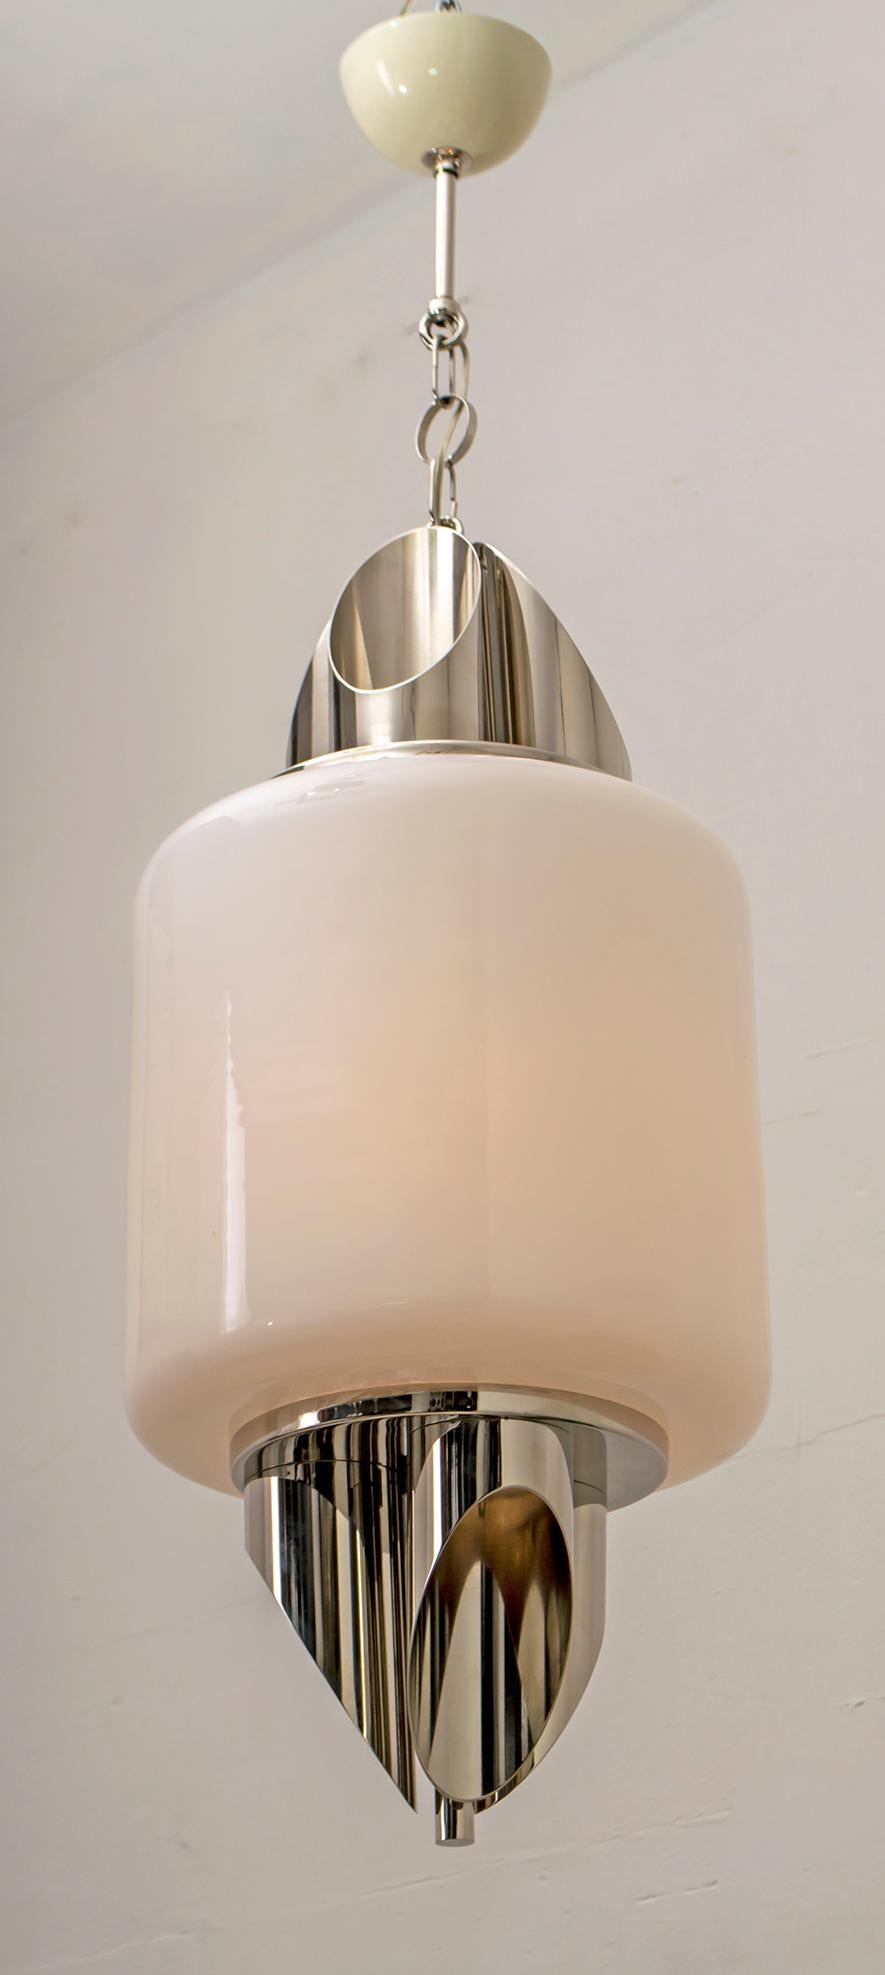 Selenova Murano cylinder ceiling lights, in opal glass and chromed metal. 3 E14 bulbs max 40 Watt each.
 